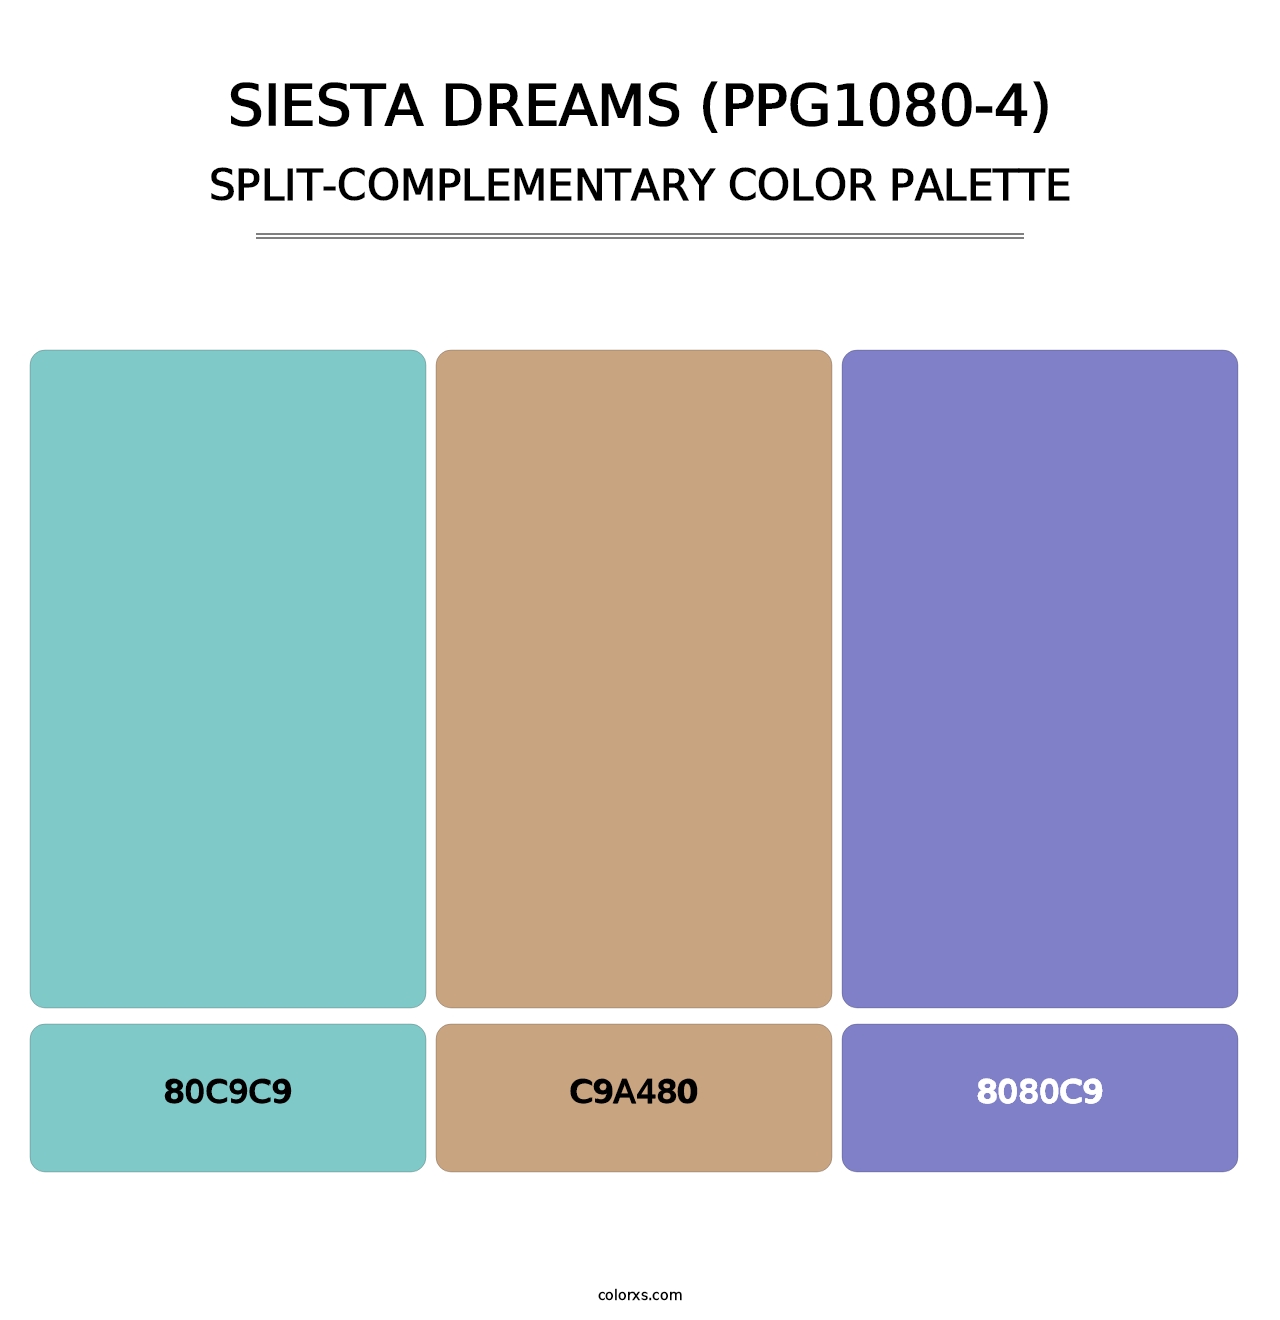 Siesta Dreams (PPG1080-4) - Split-Complementary Color Palette